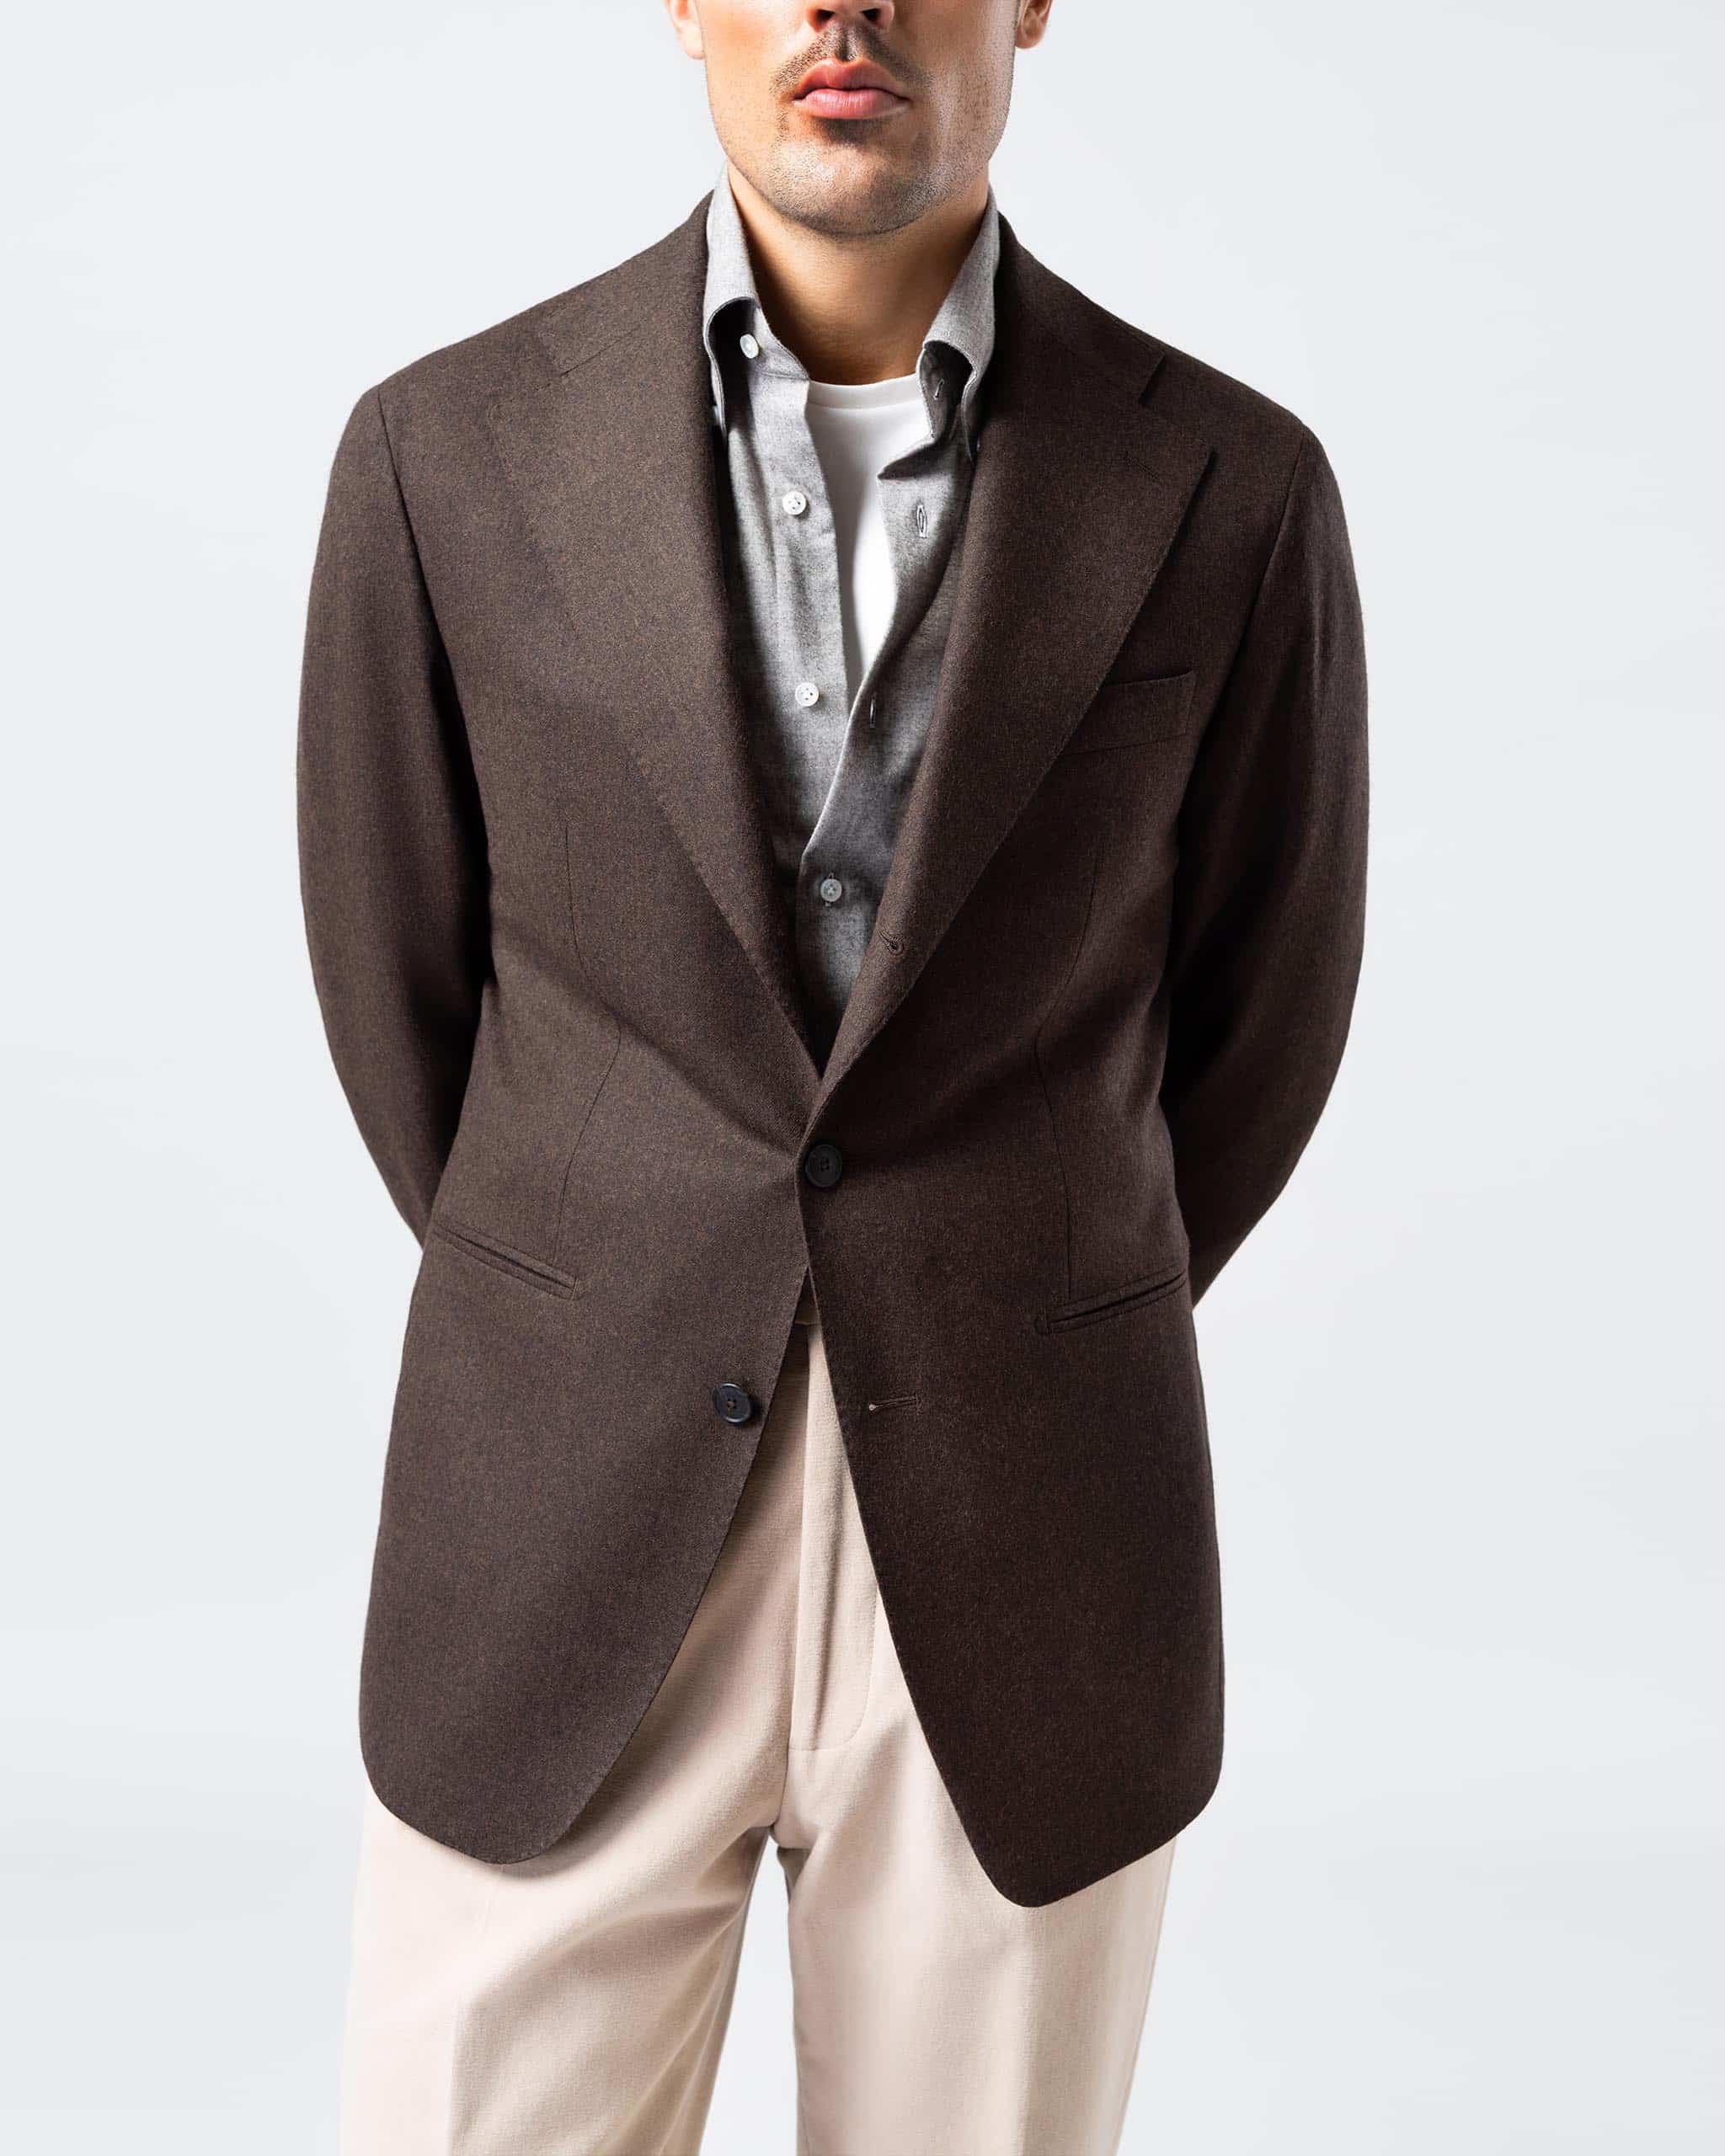 Jacket flannel dark brown image 2